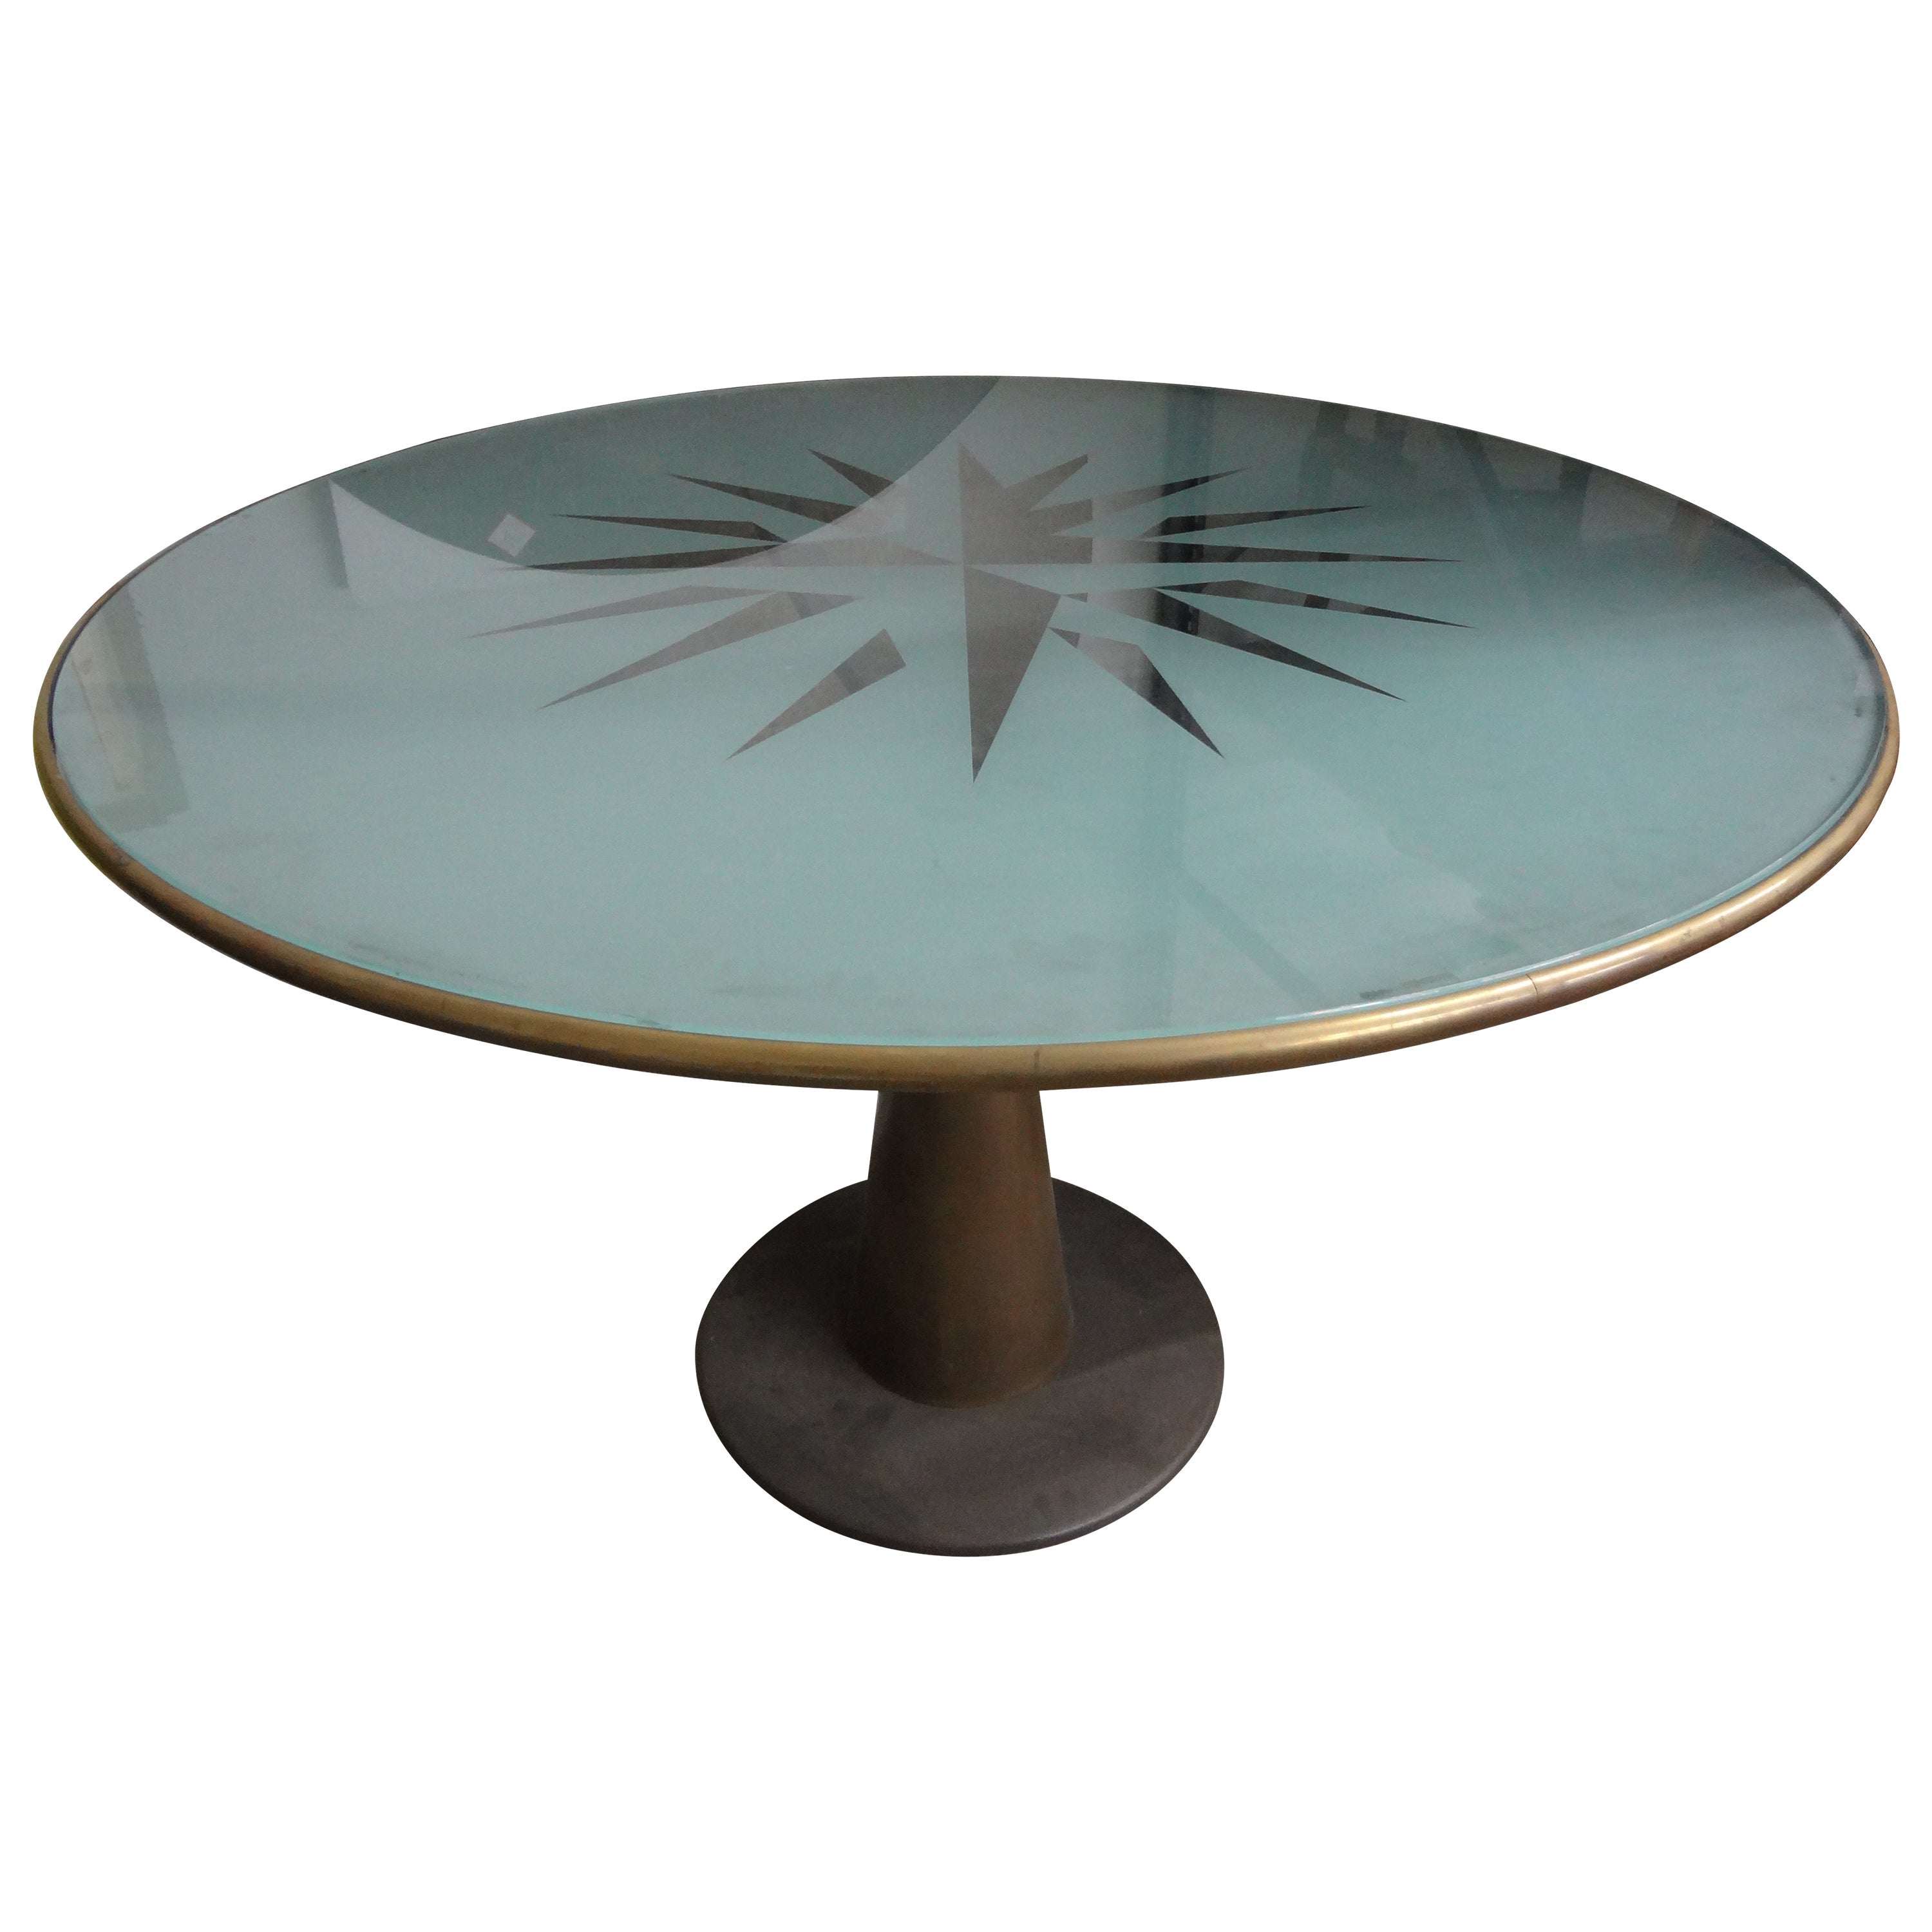 Italian Modern Oscar Tusquets Astrolabio Center Table For Sale